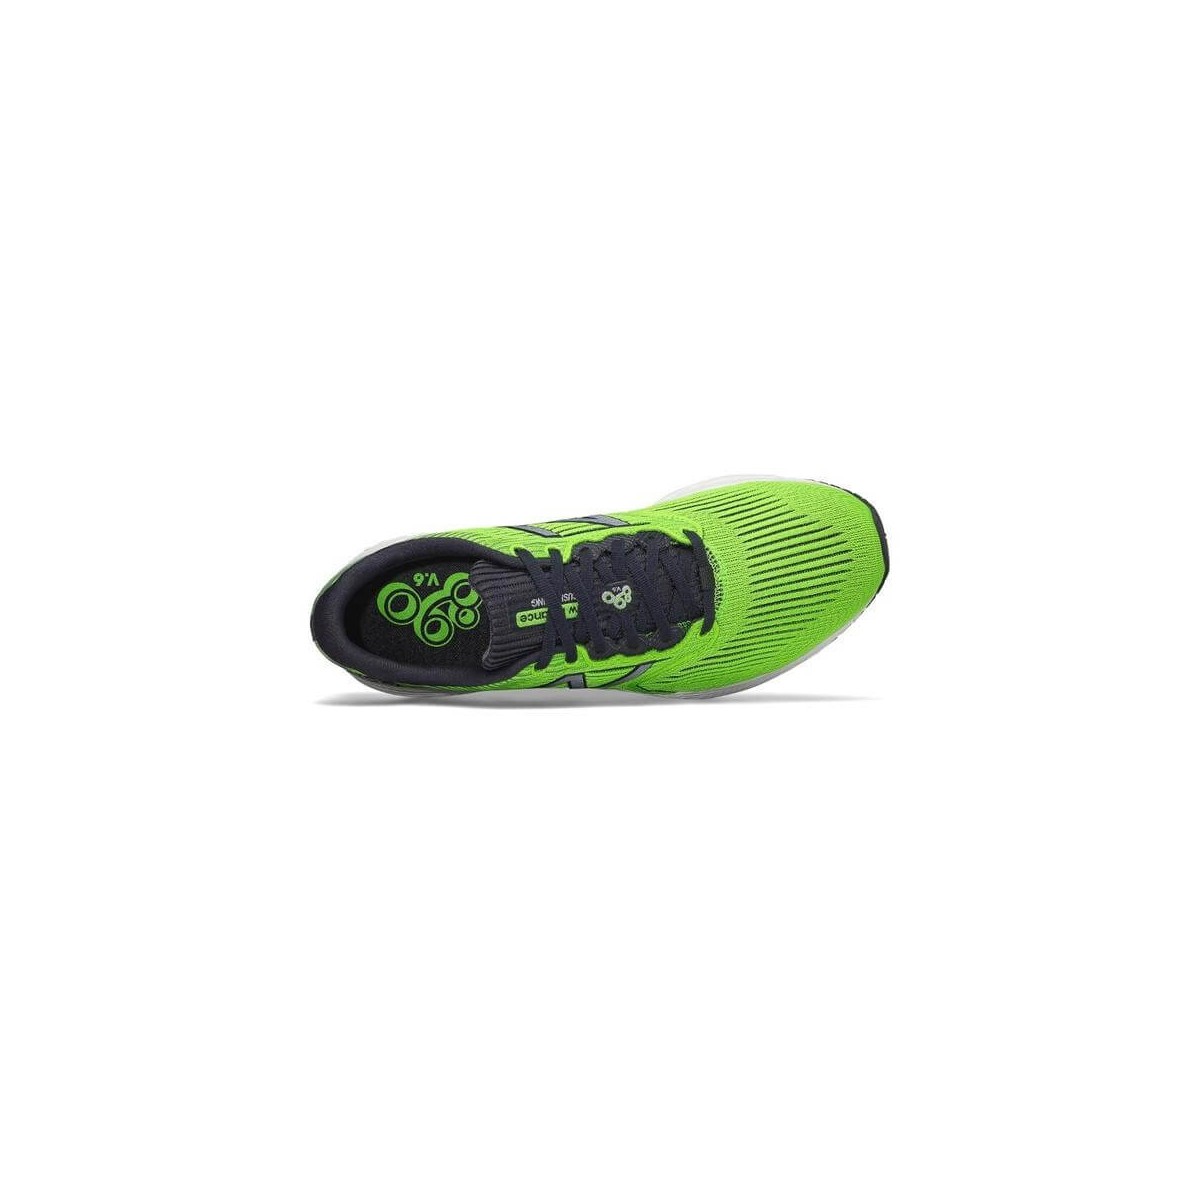 New Balance 890 v6 Green Men's Shoes